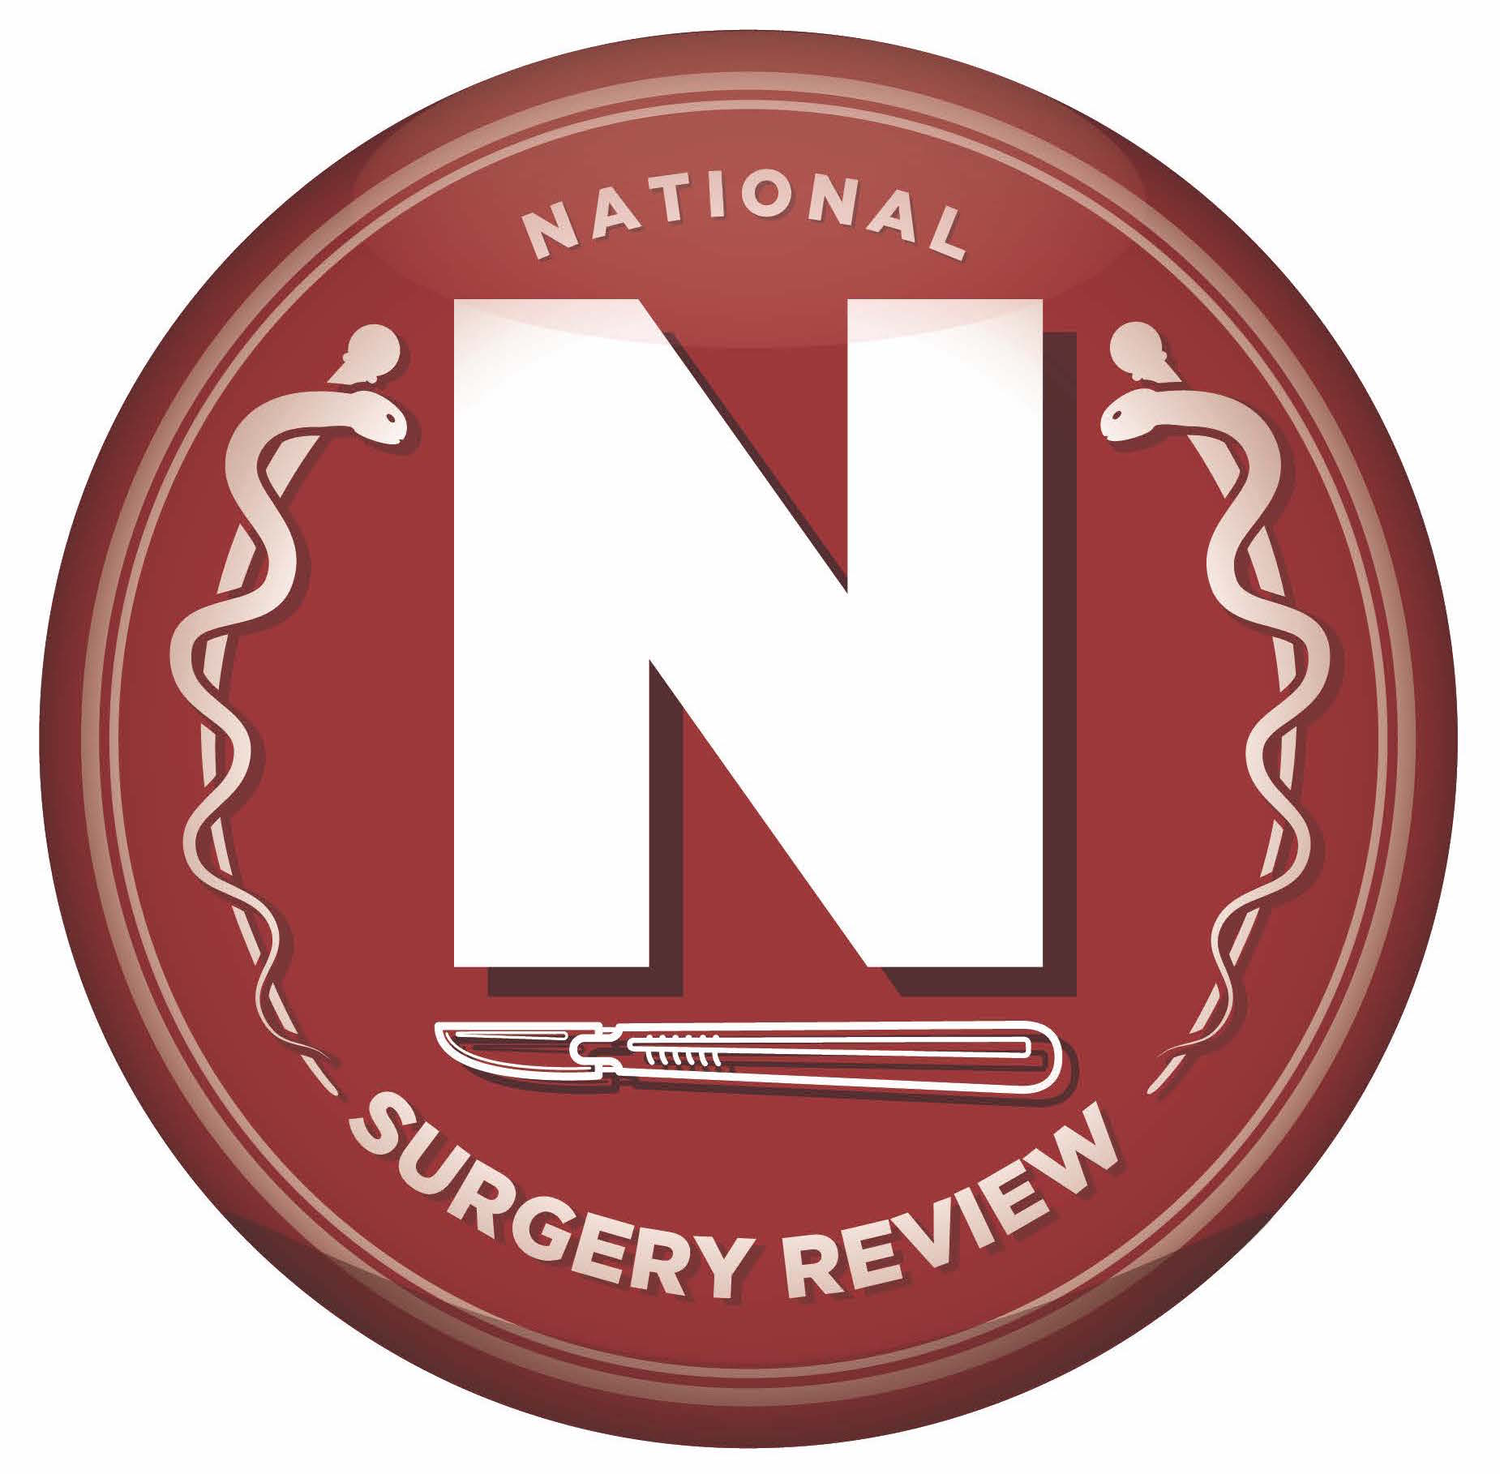 ABSITE Exam — National Surgery Review